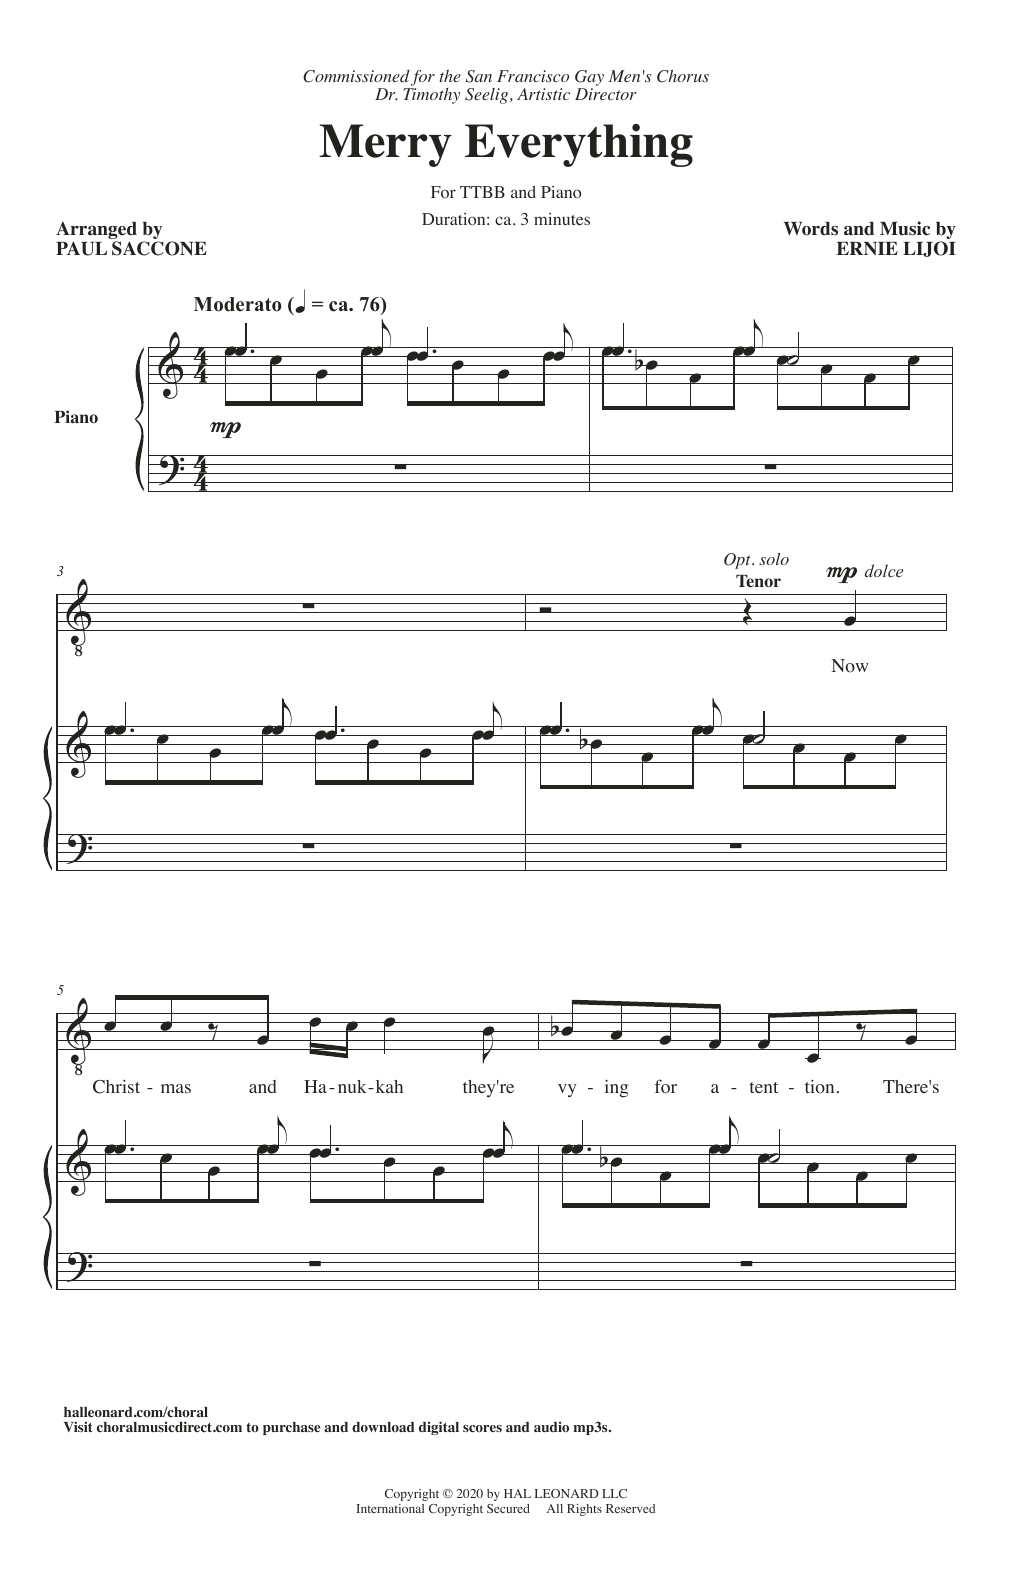 Ernie Lijoi Merry Everything (arr. Paul Saccone) Sheet Music Notes & Chords for TTBB Choir - Download or Print PDF